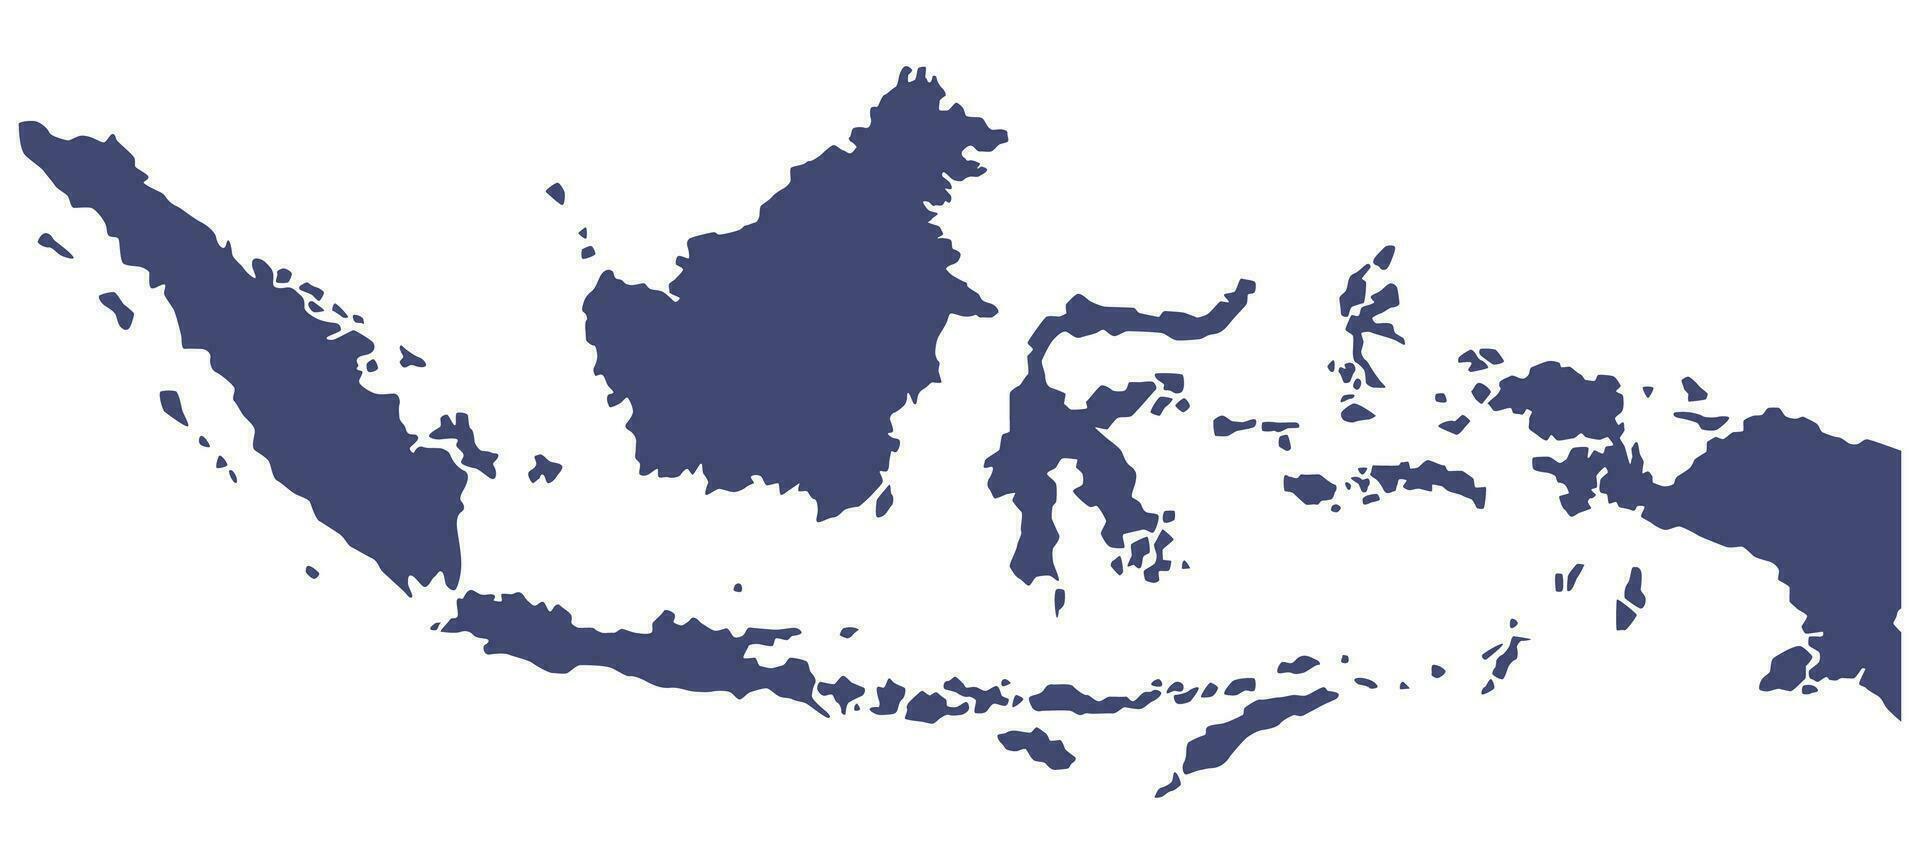 Indonesia mapa vector aislado en blanco antecedentes.